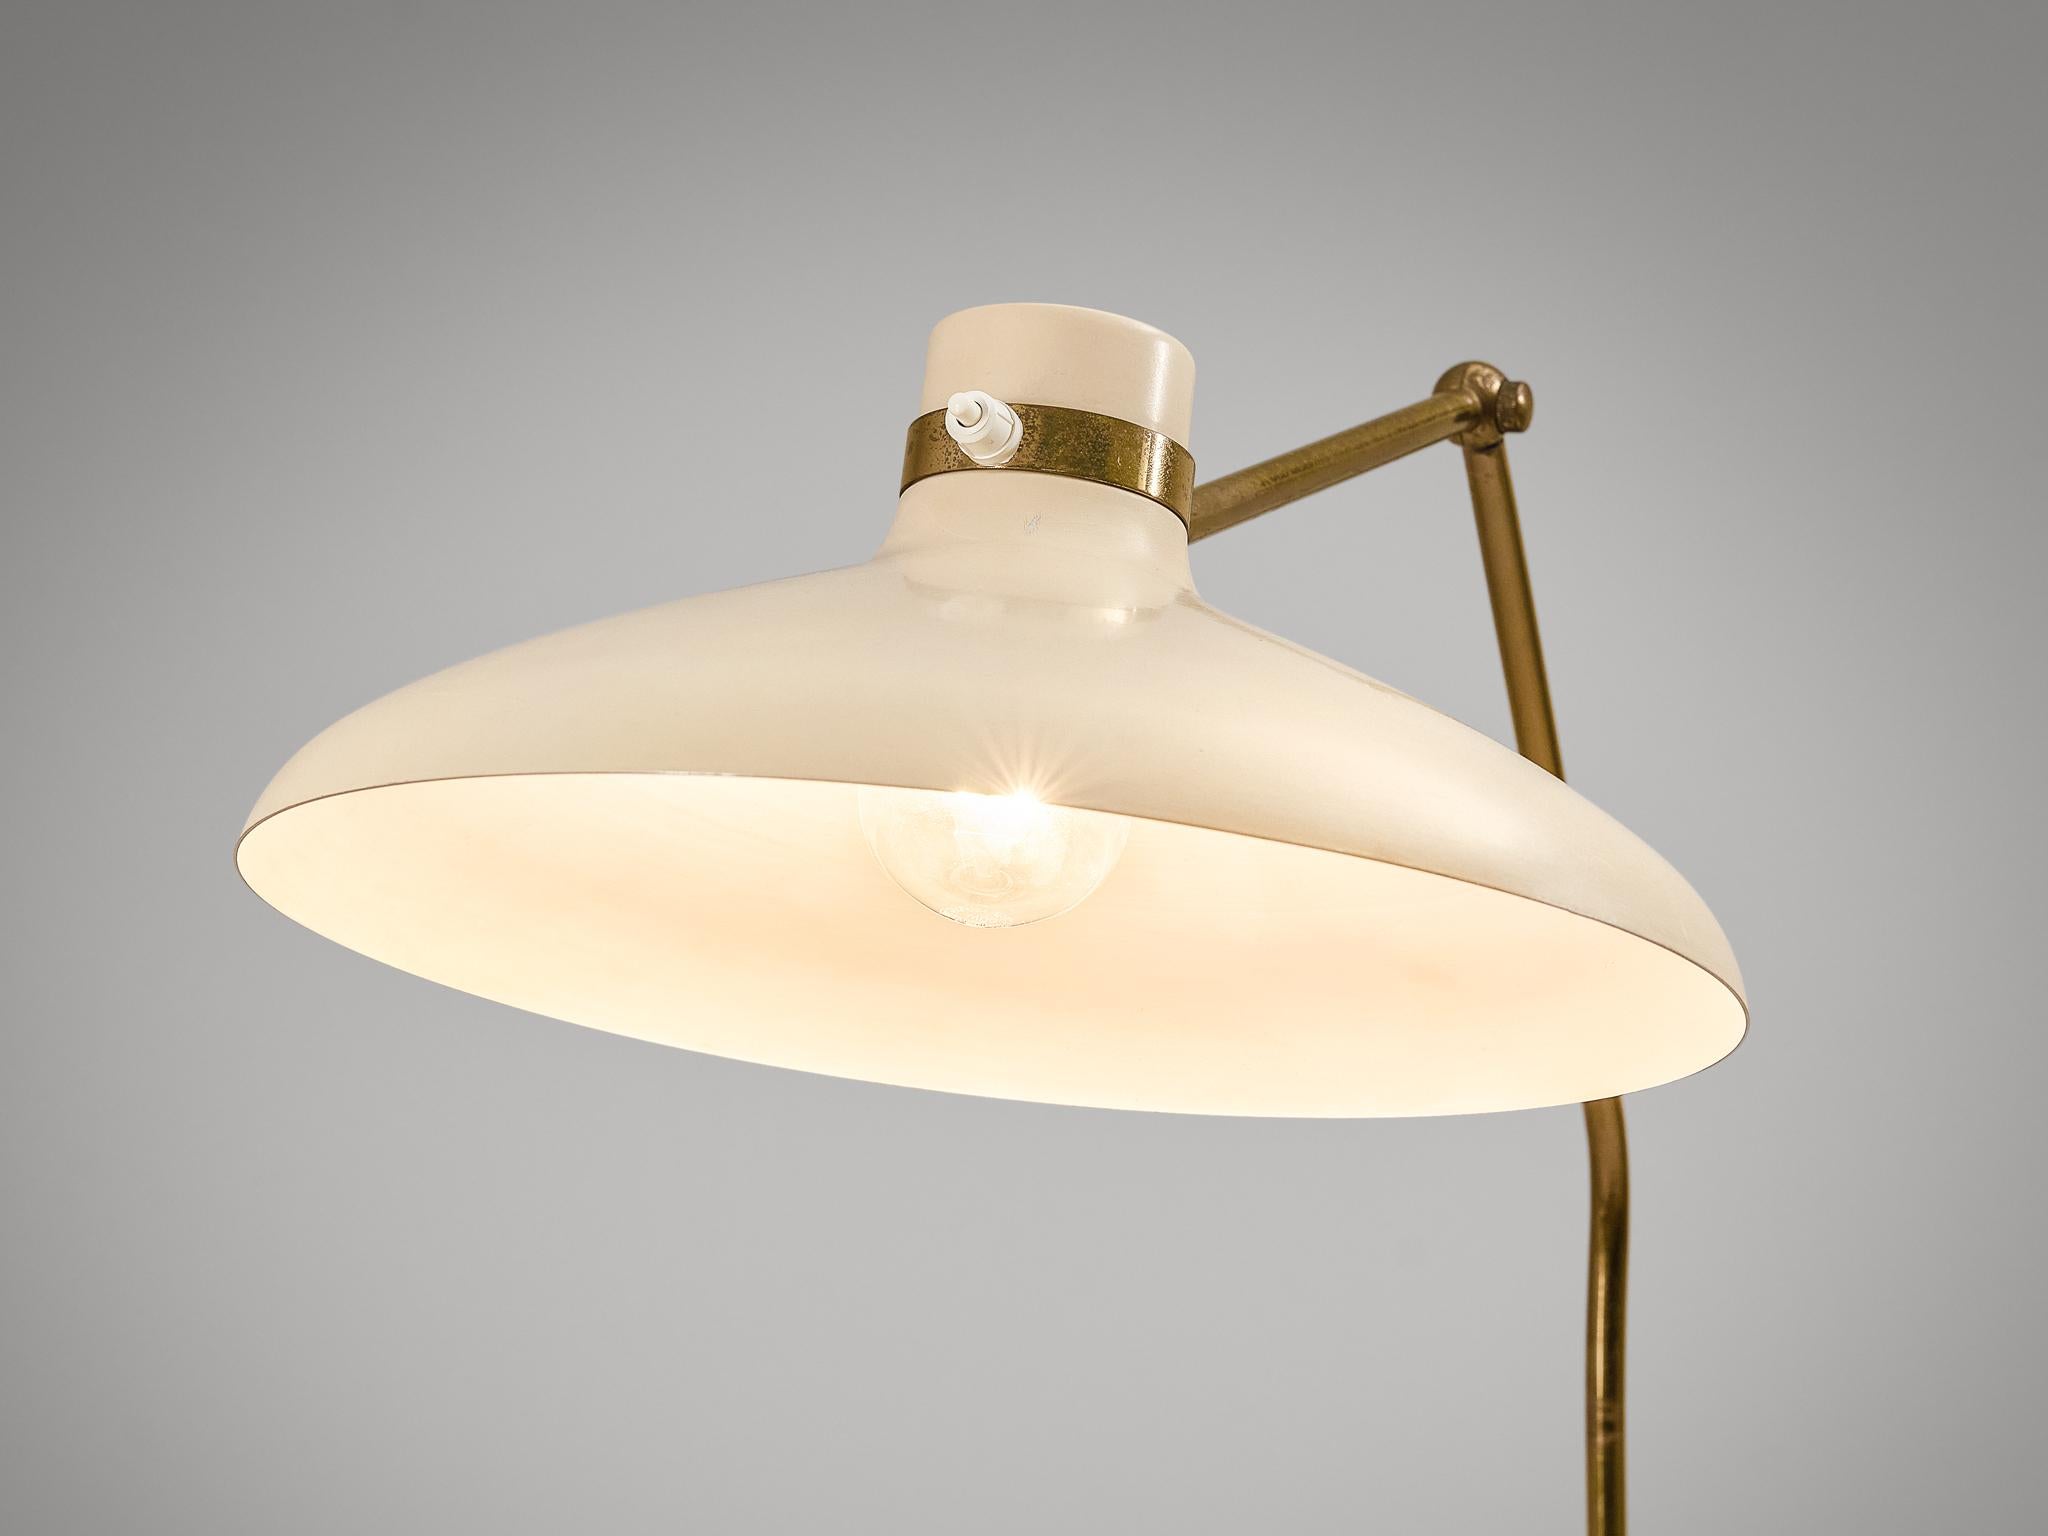 Italian Gio Ponti for Fontana Arte ‘Parco Dei Principi’ Floor Lamp with White Shade